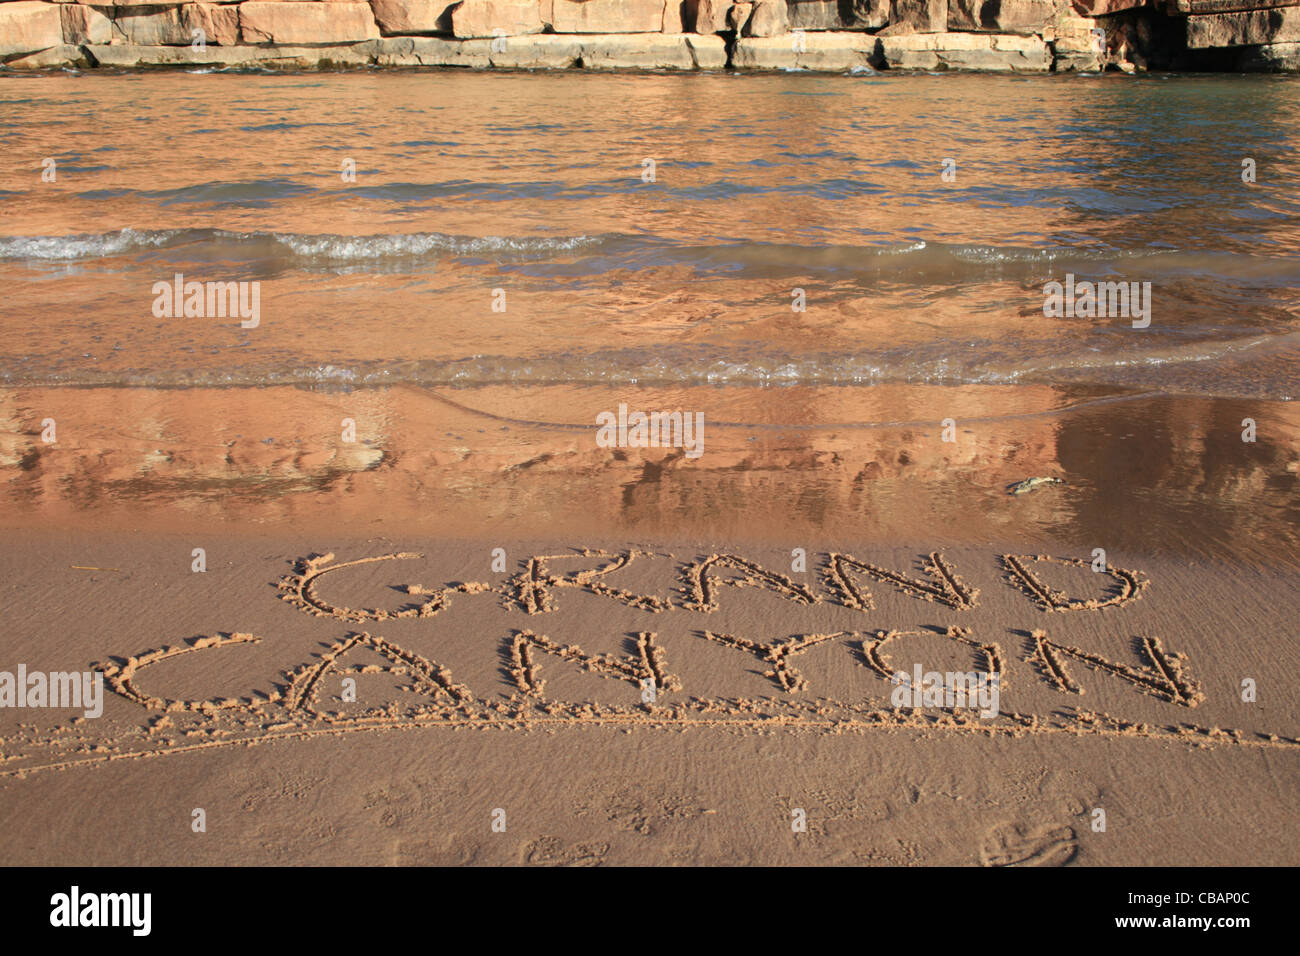 Grand Canyon written in the sand on a Colorado River bank beach Stock Photo